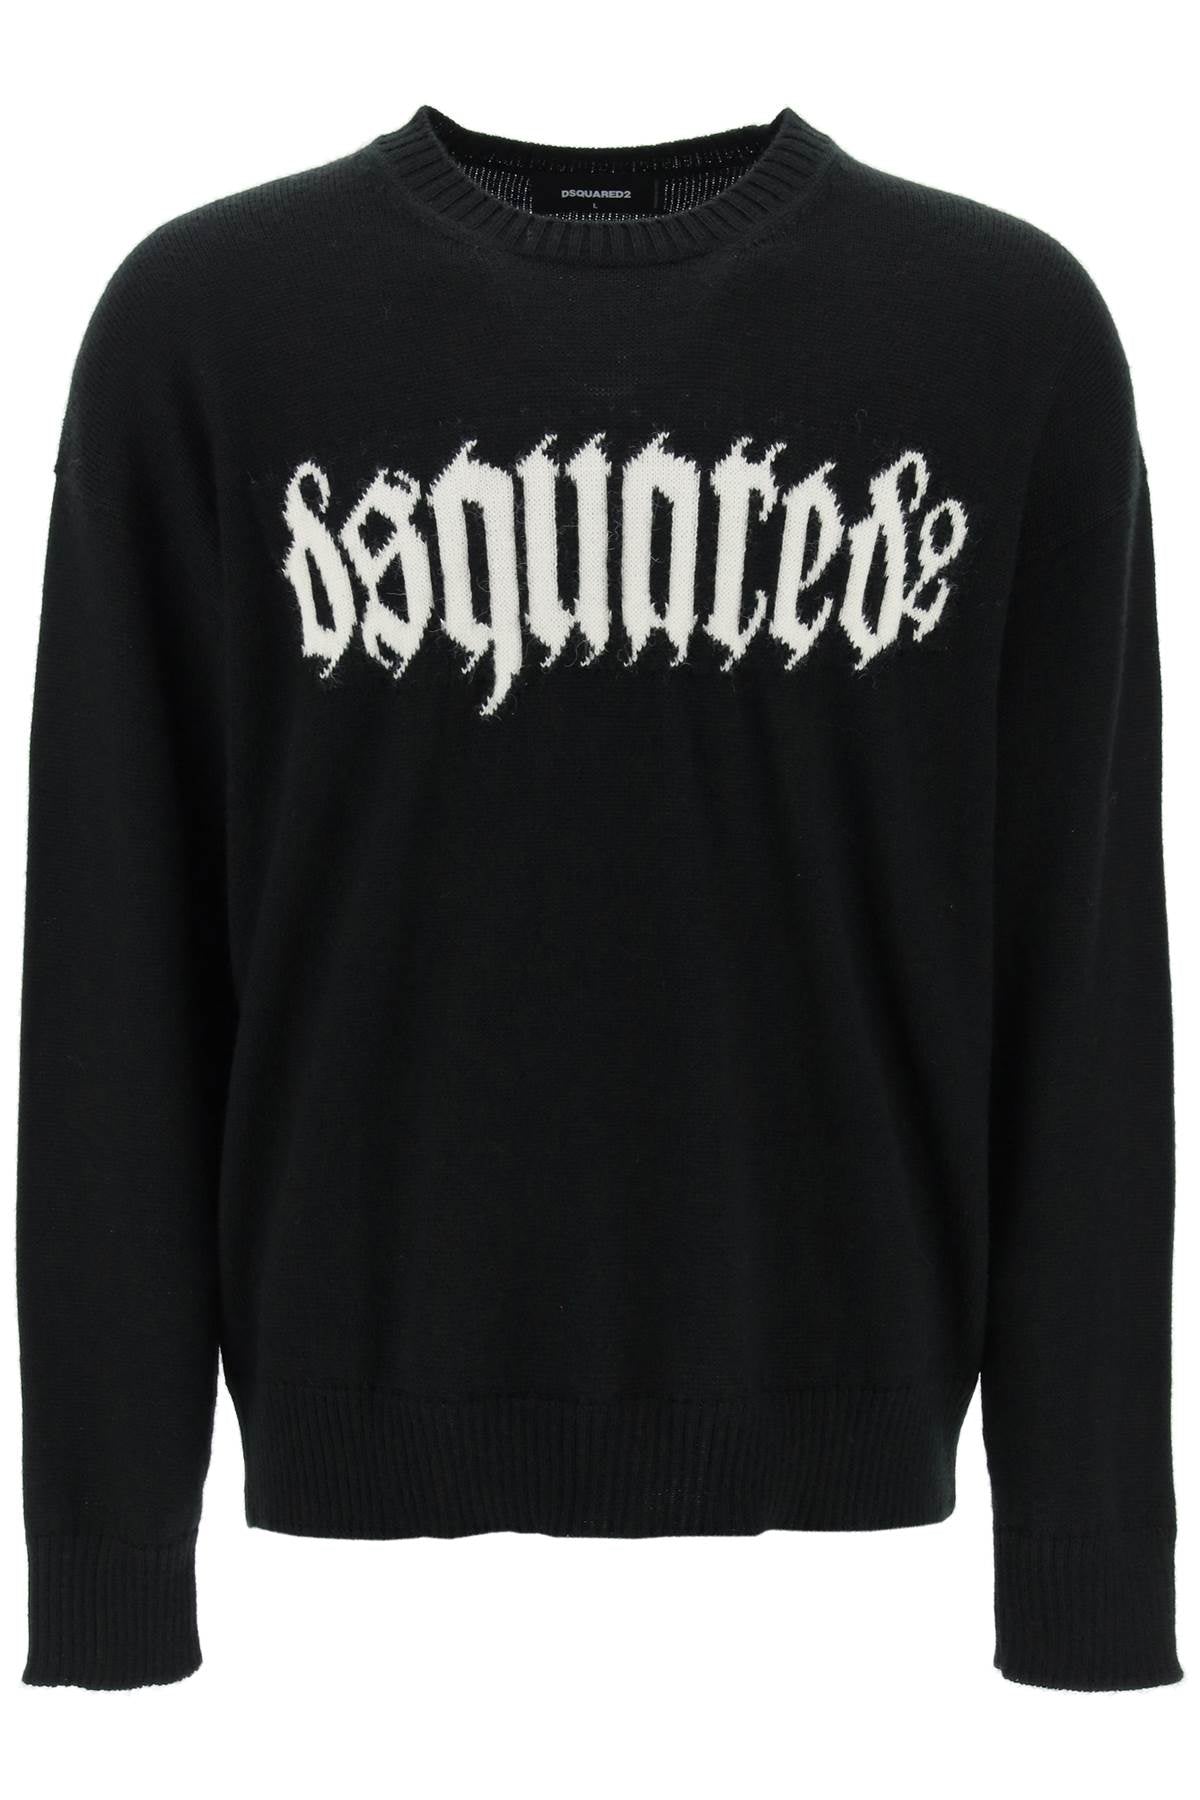 Dsquared2 gothic logo sweater-0